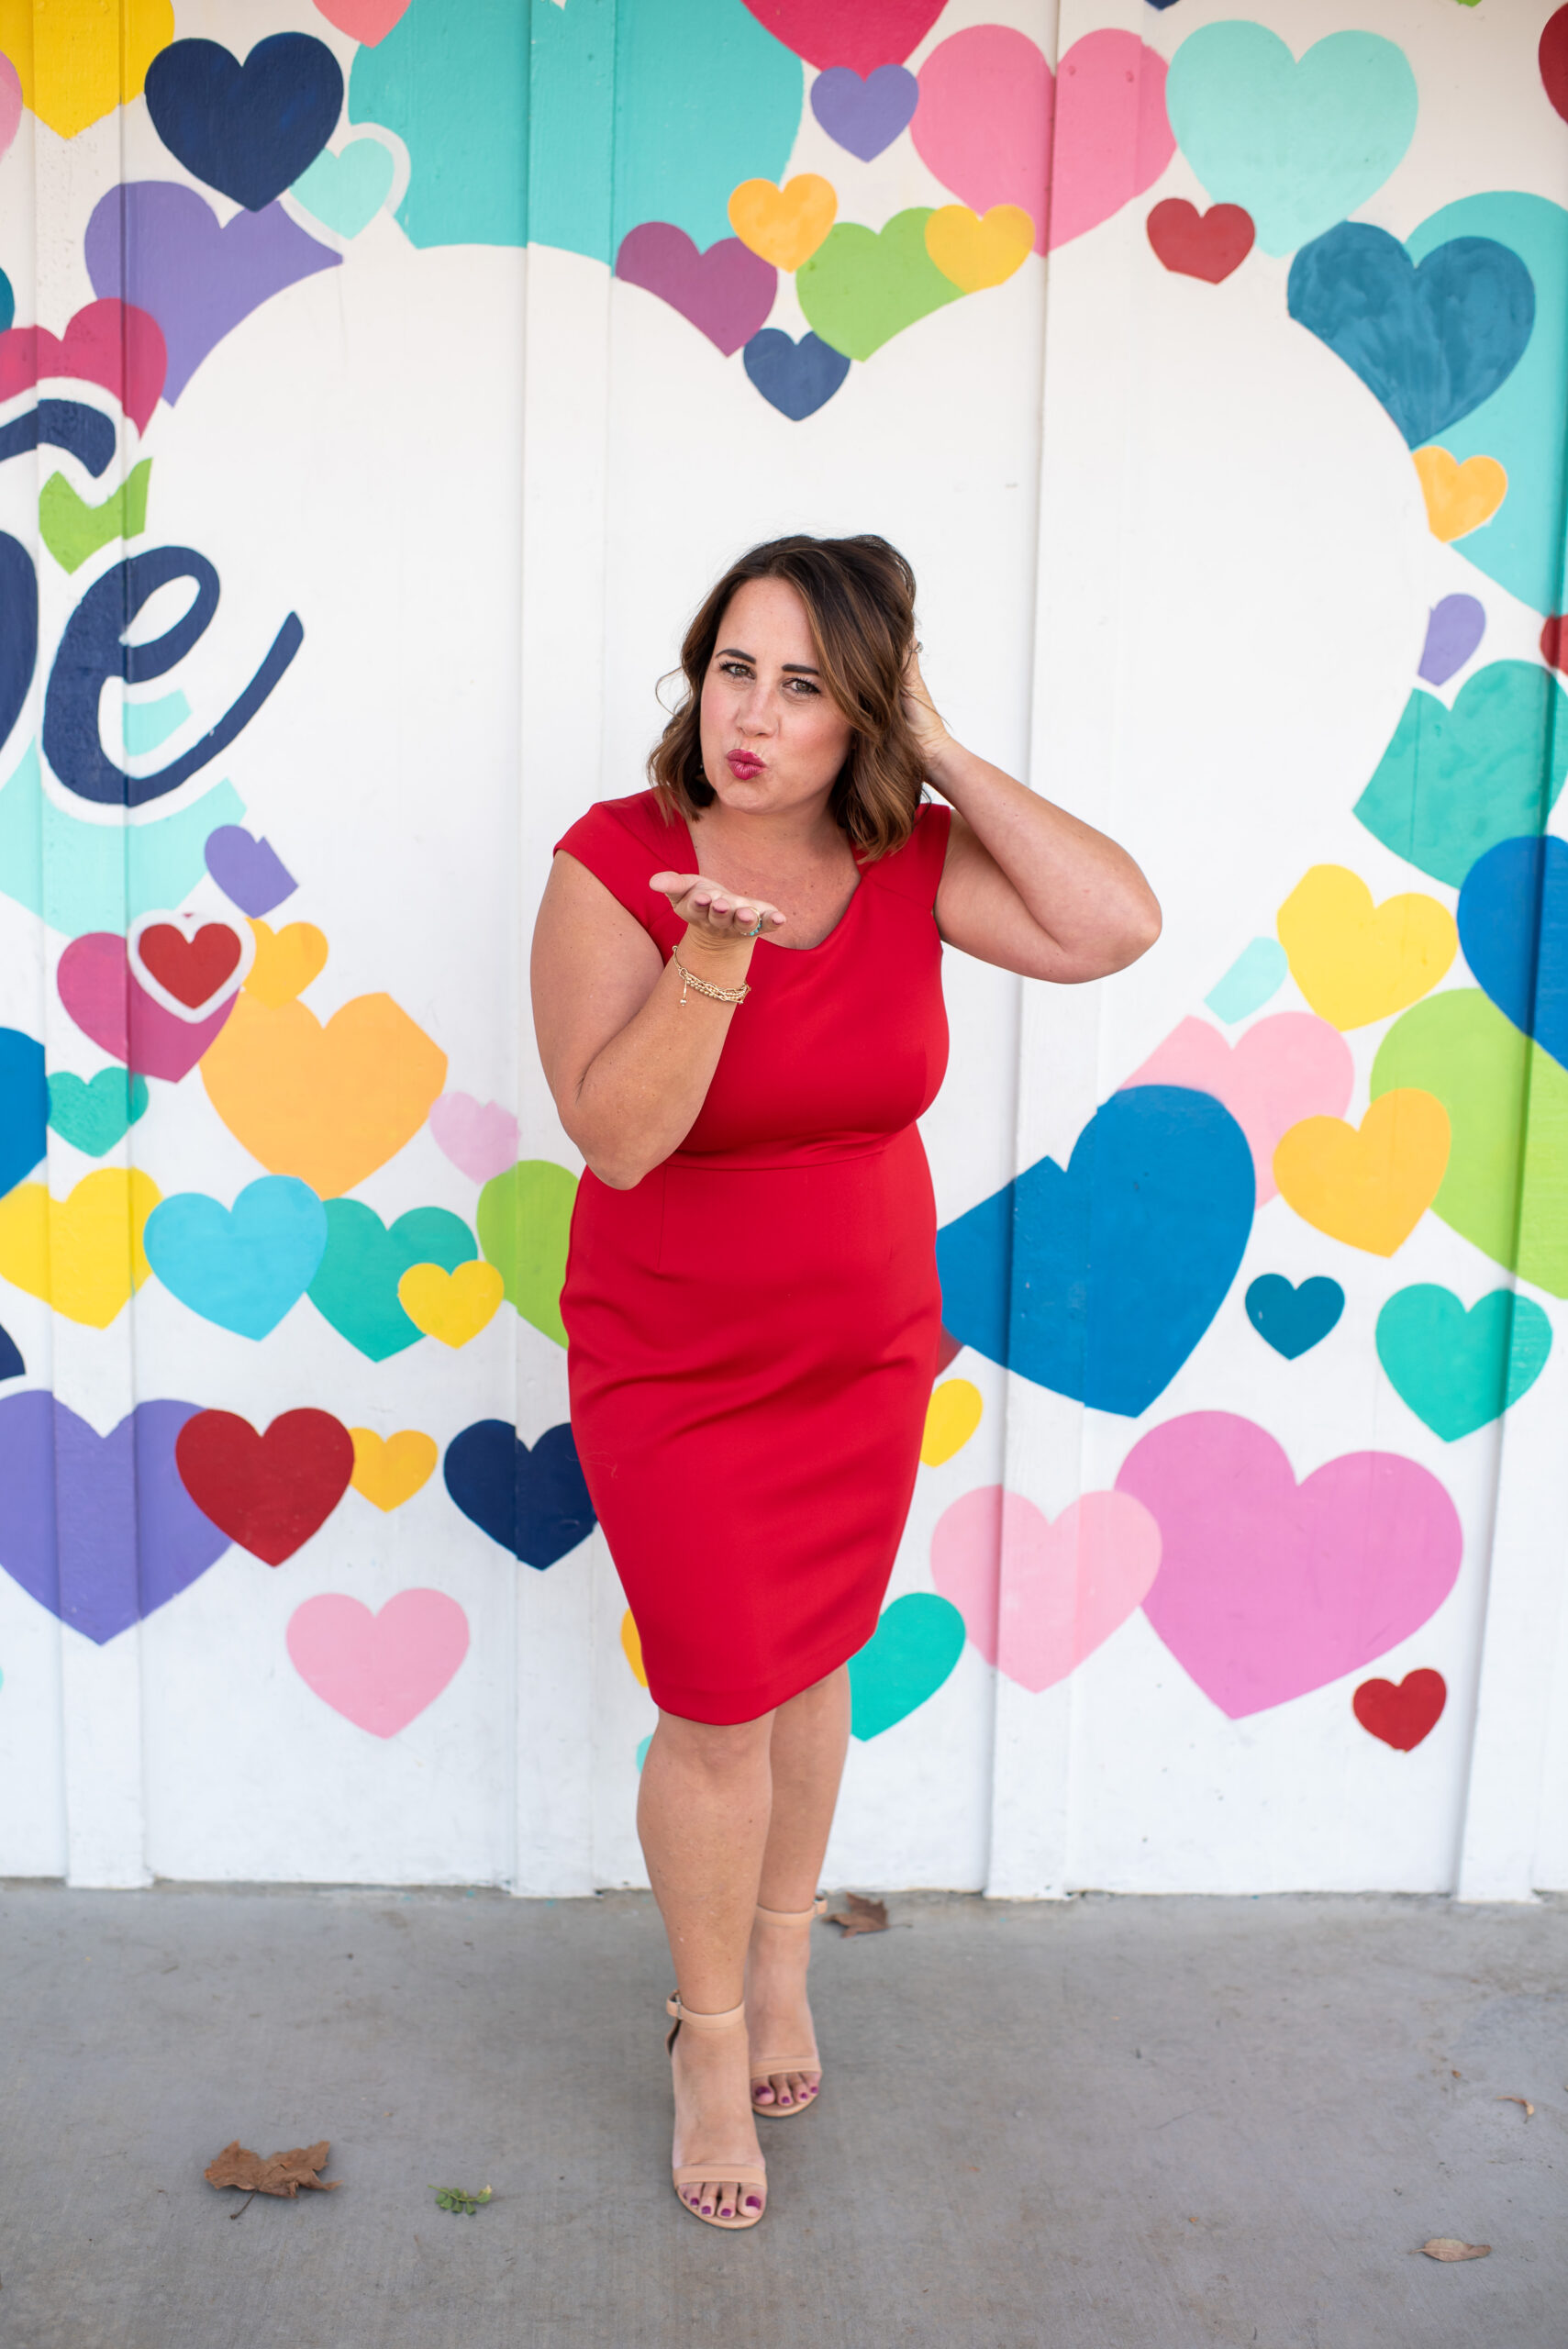 Bree's Five Favorite Valentine's Day Date Spots